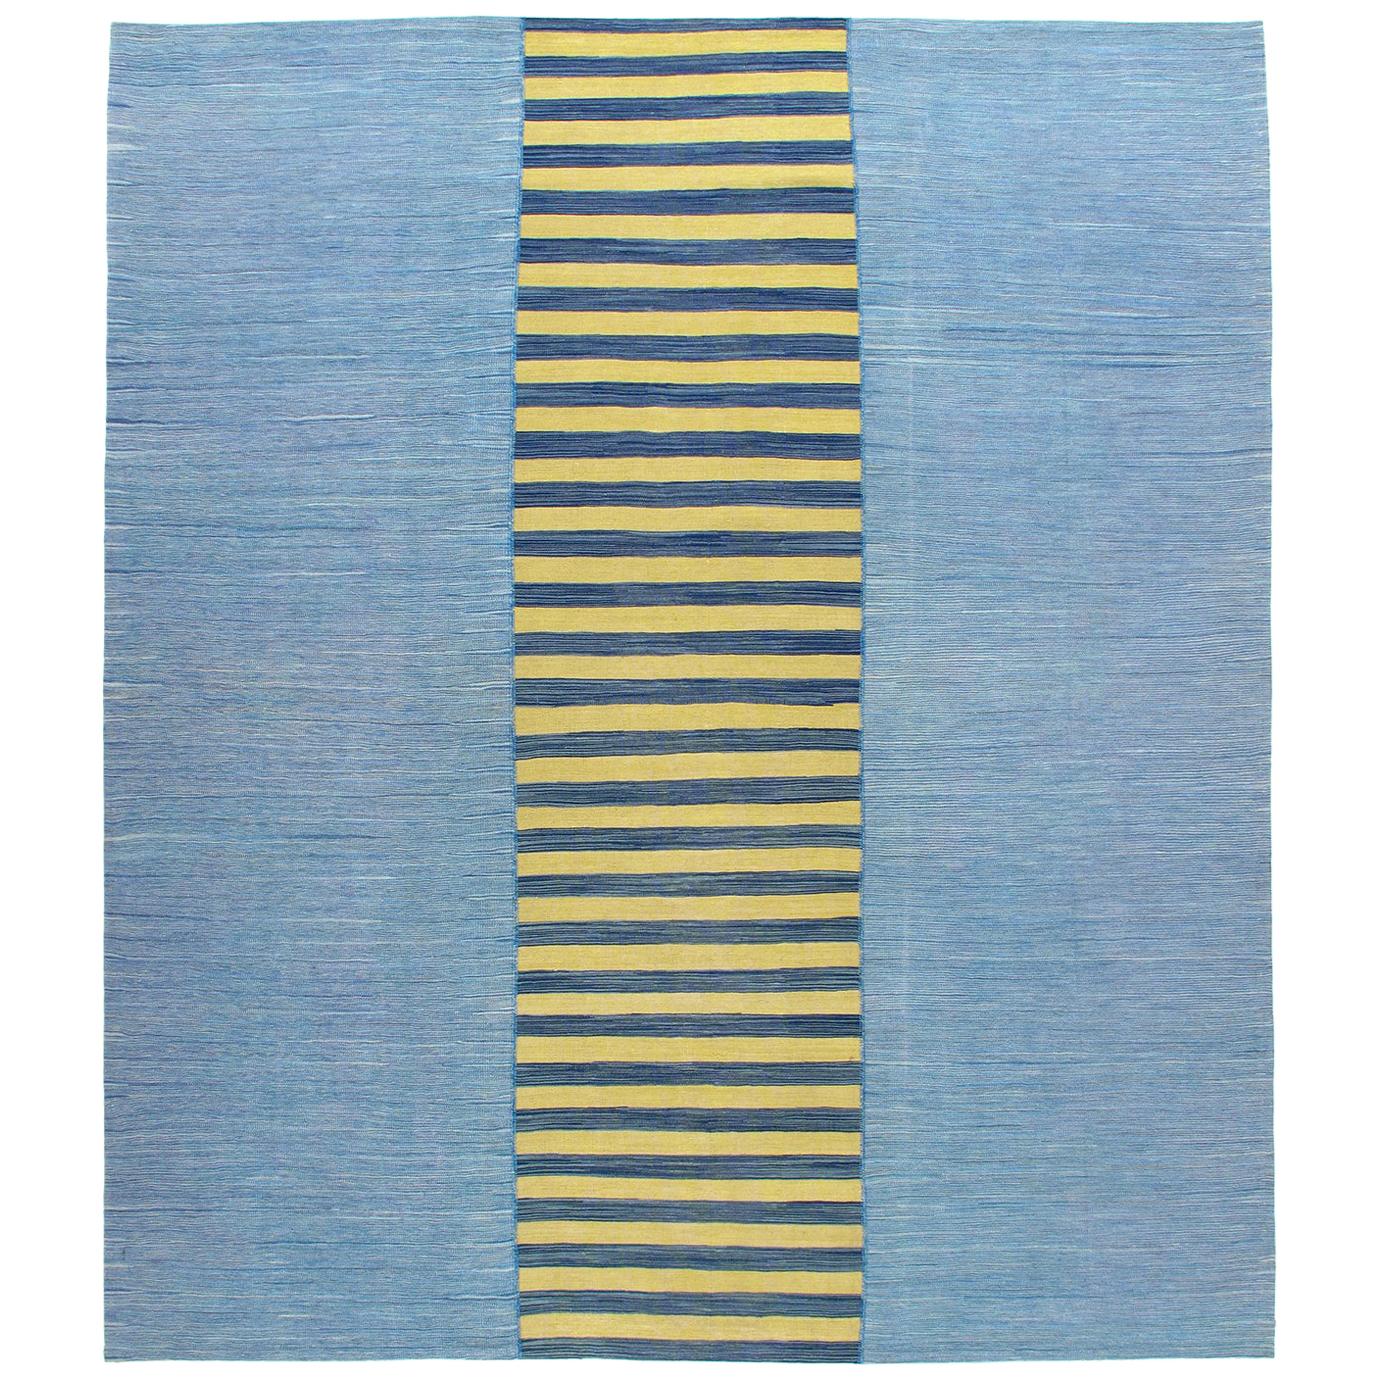 Mid-Century Modern Style Minimalist Mazandaran Stripe Flat-Weave Rug